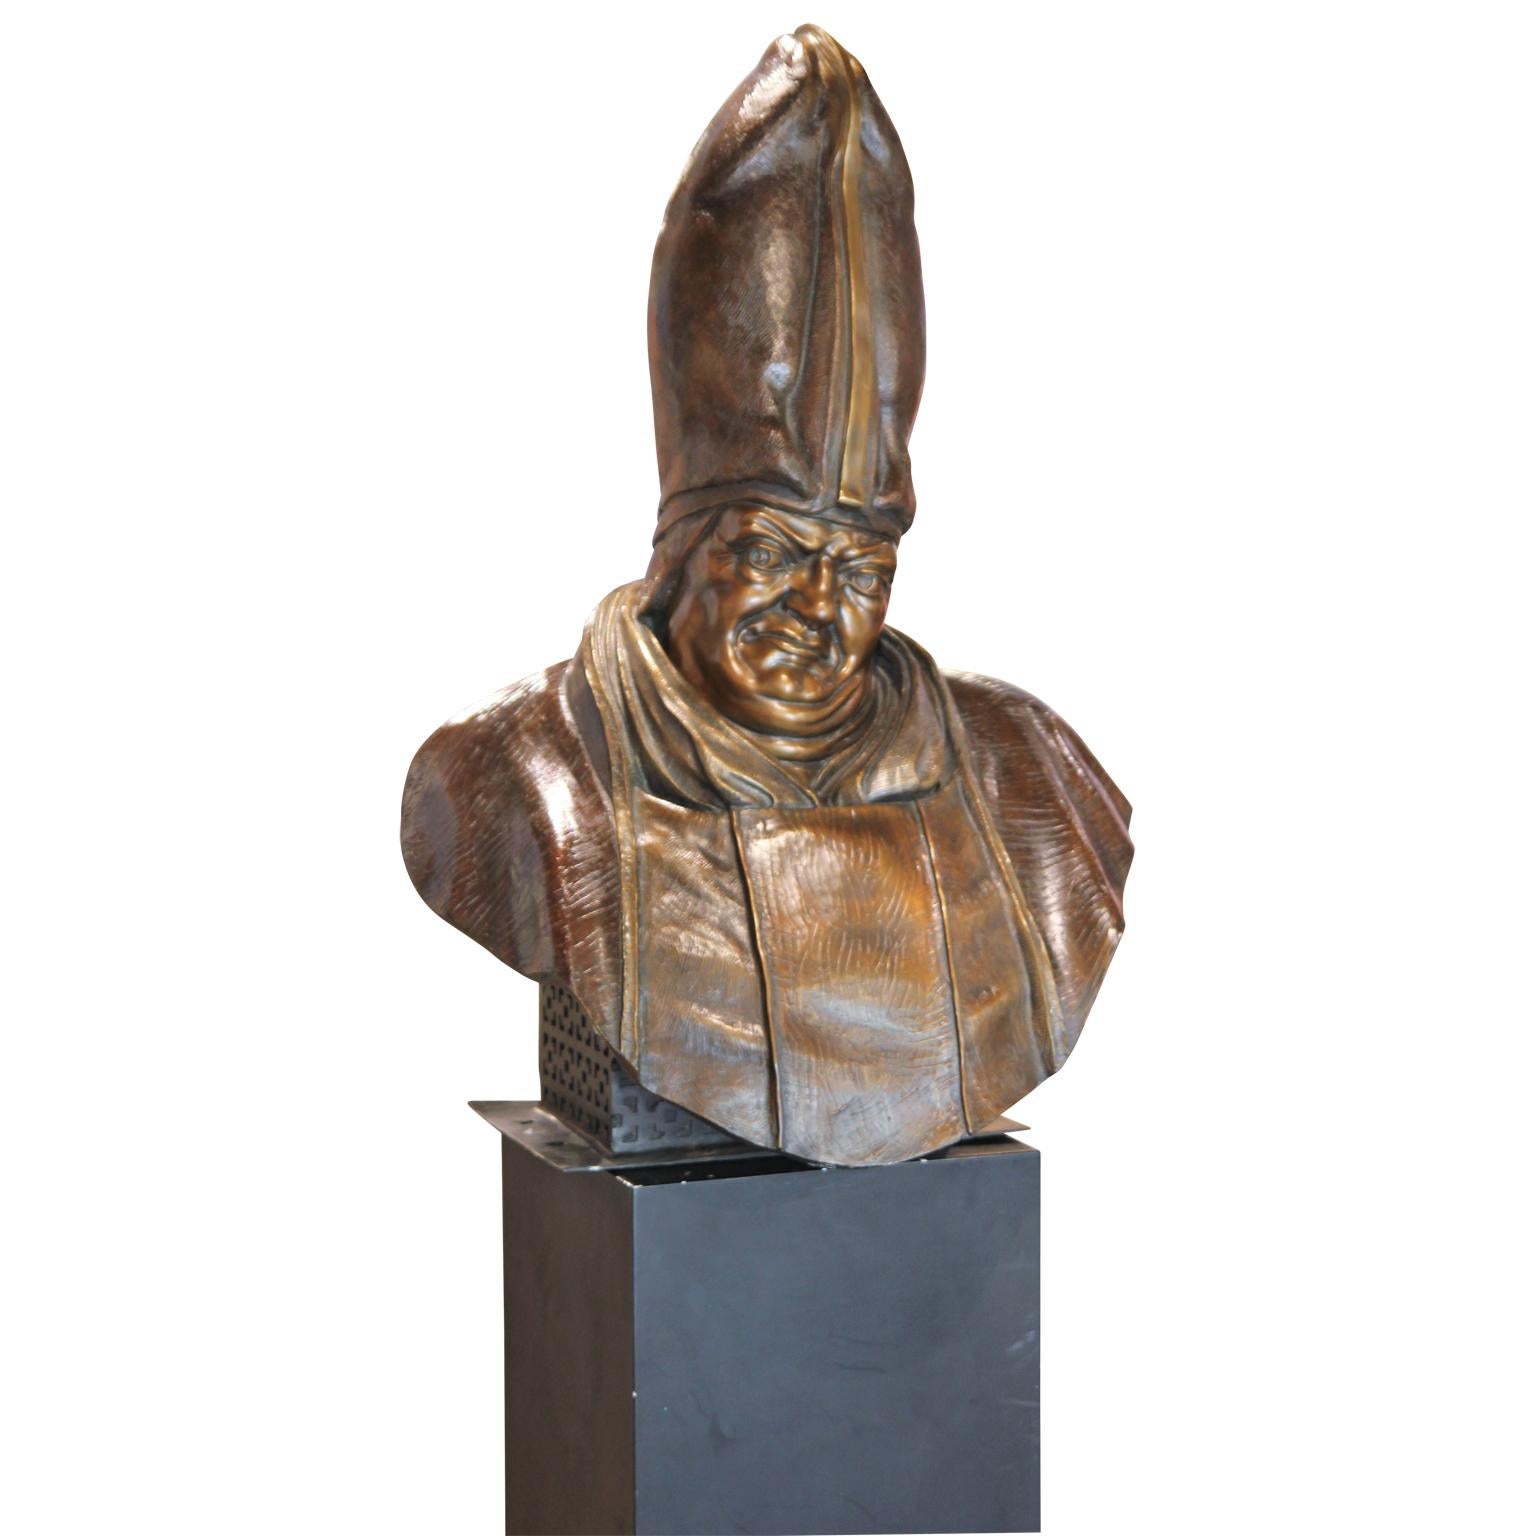 “The Cardinal” Large Catholic Christian Priest Bronze Bust Sculpture - Gold Figurative Sculpture by Jerry Boyle